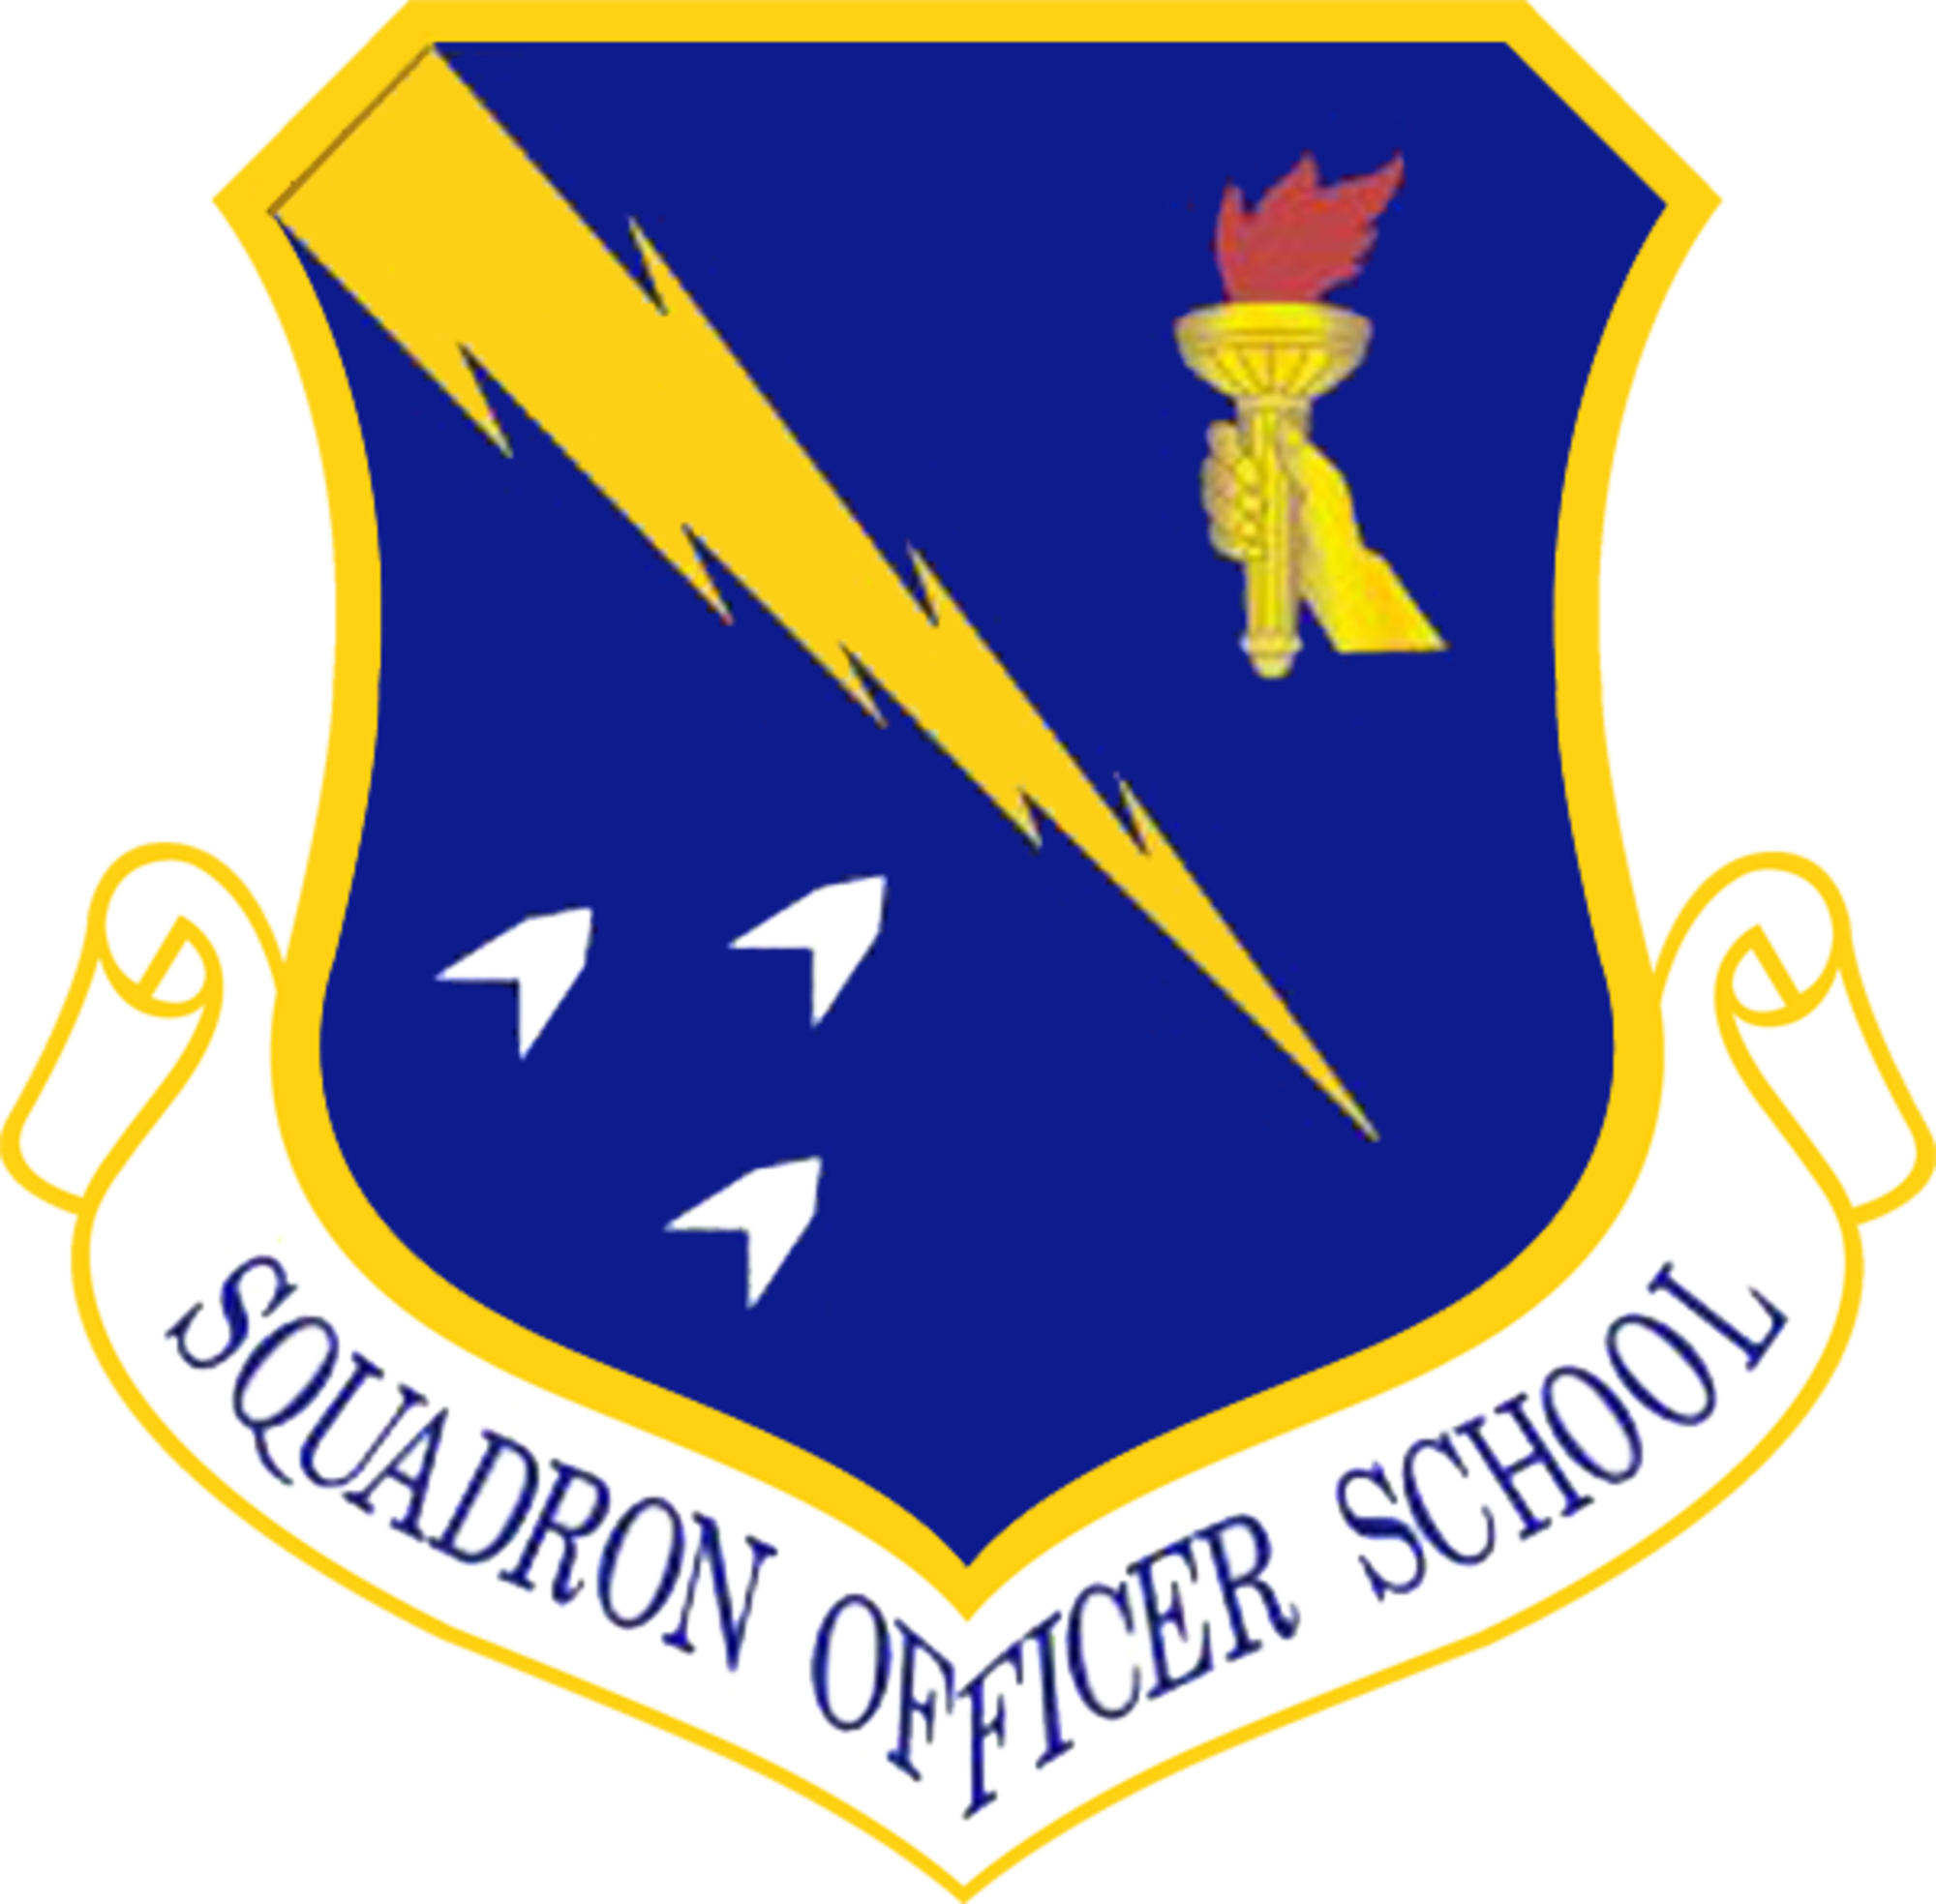 Squadron Officer School Emblem